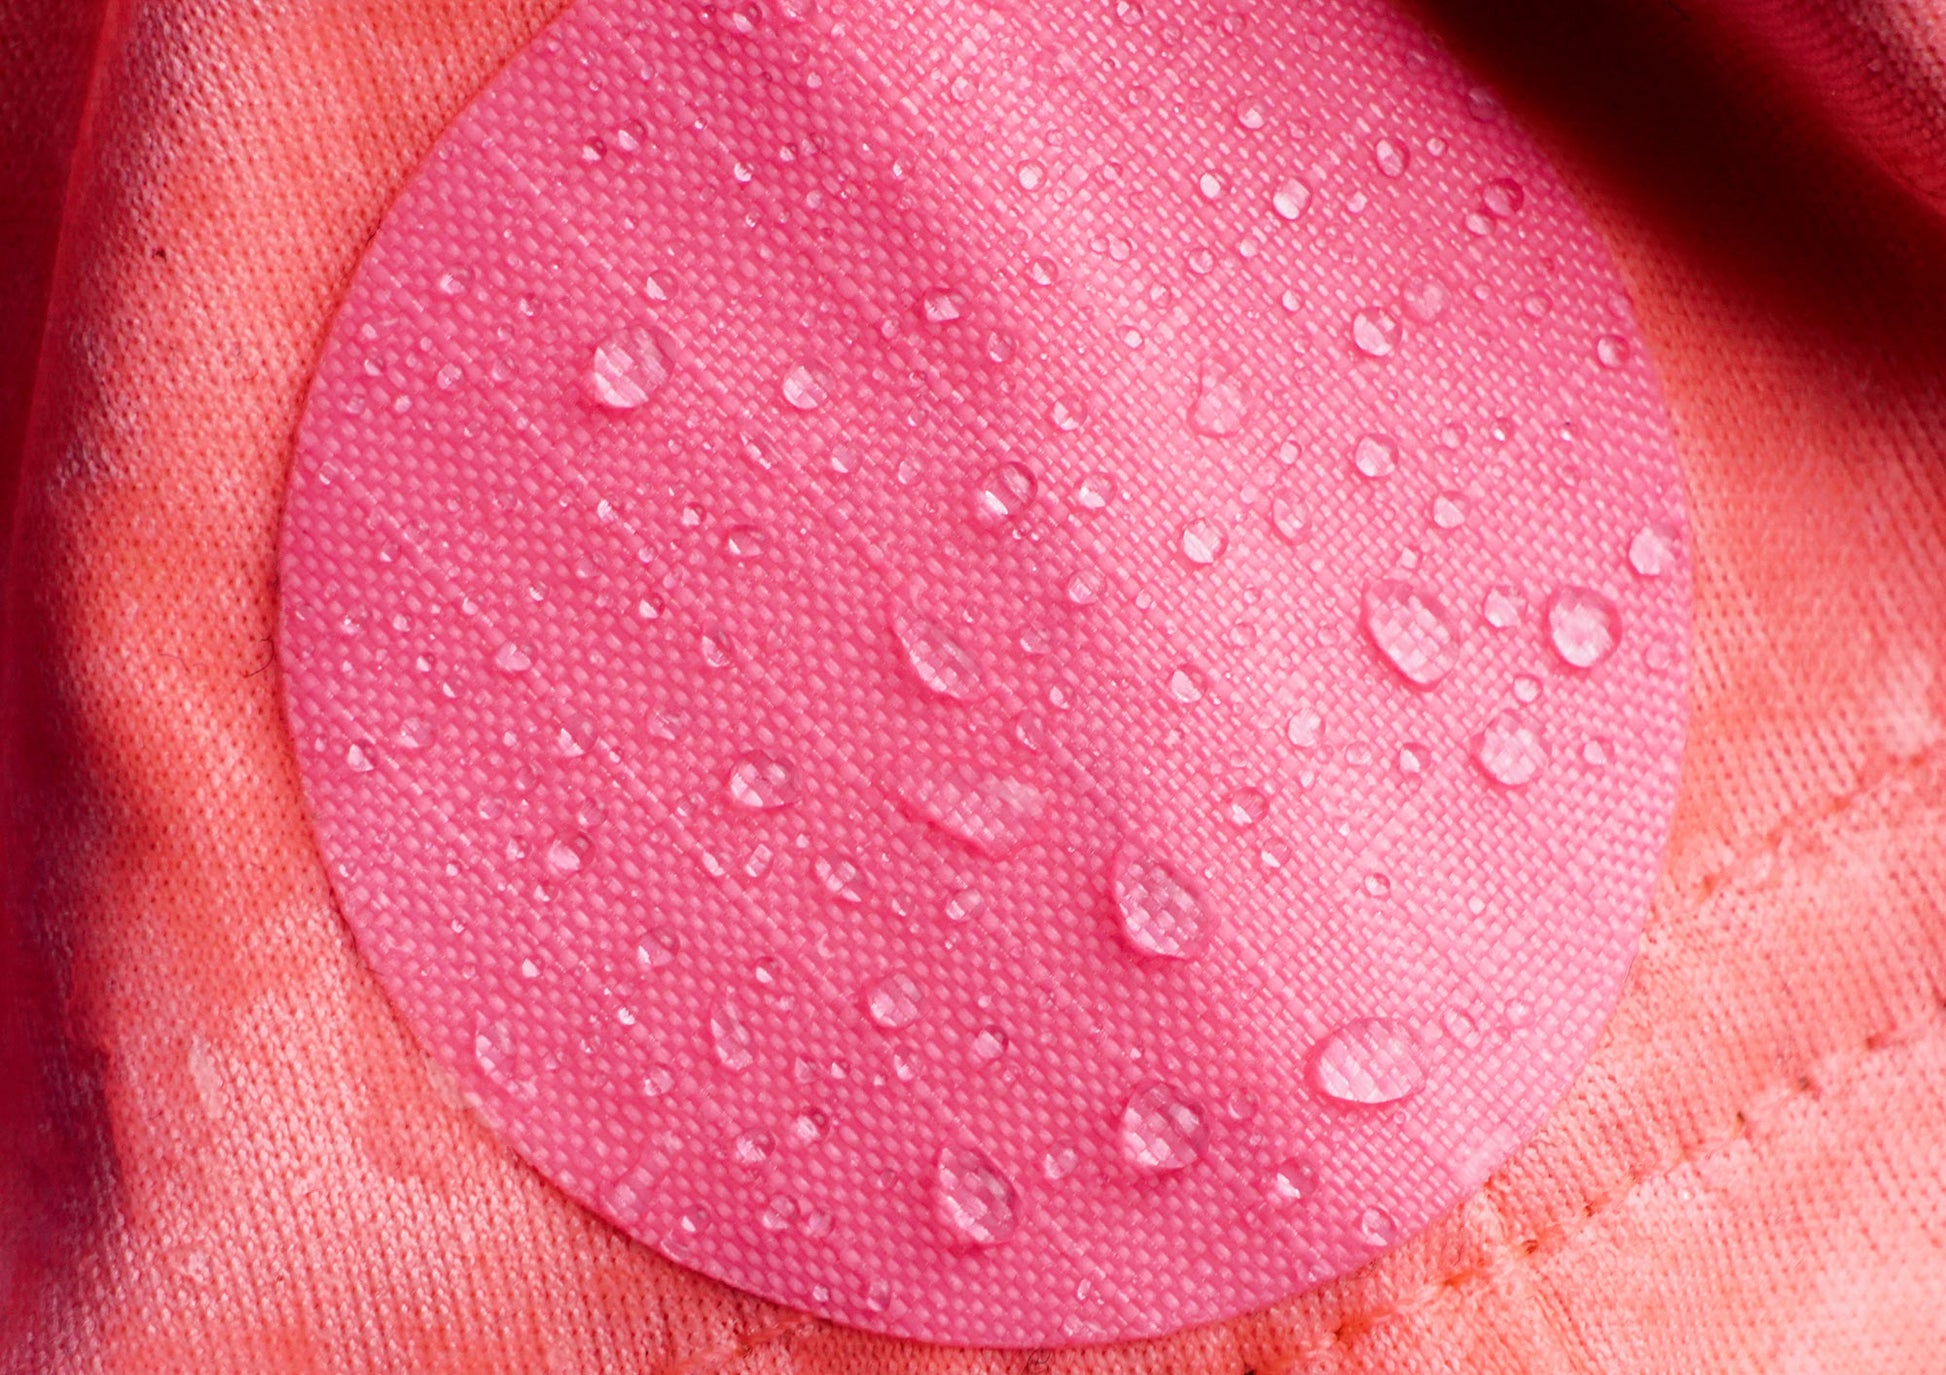 aZengear Down Jacket Repair Patches | Pre-Cut, Self-Adhesive